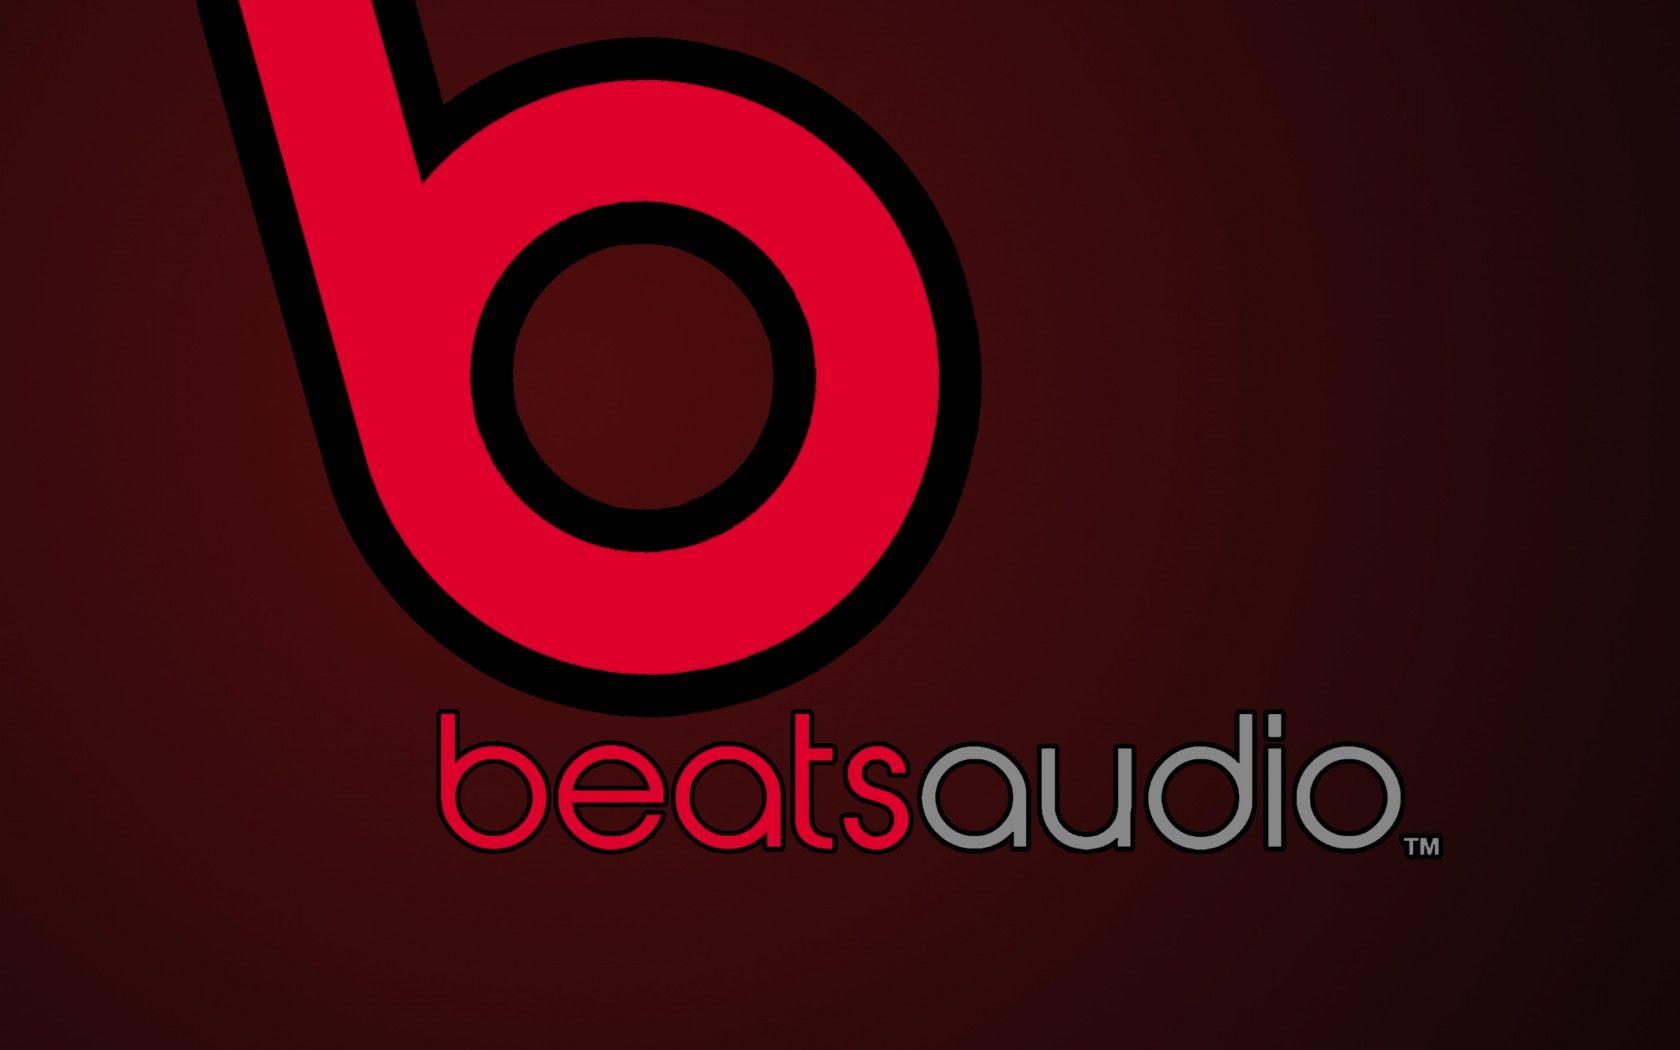 Beats Audio Logo - beats audio logo and music streaming service - RouteNote Blog